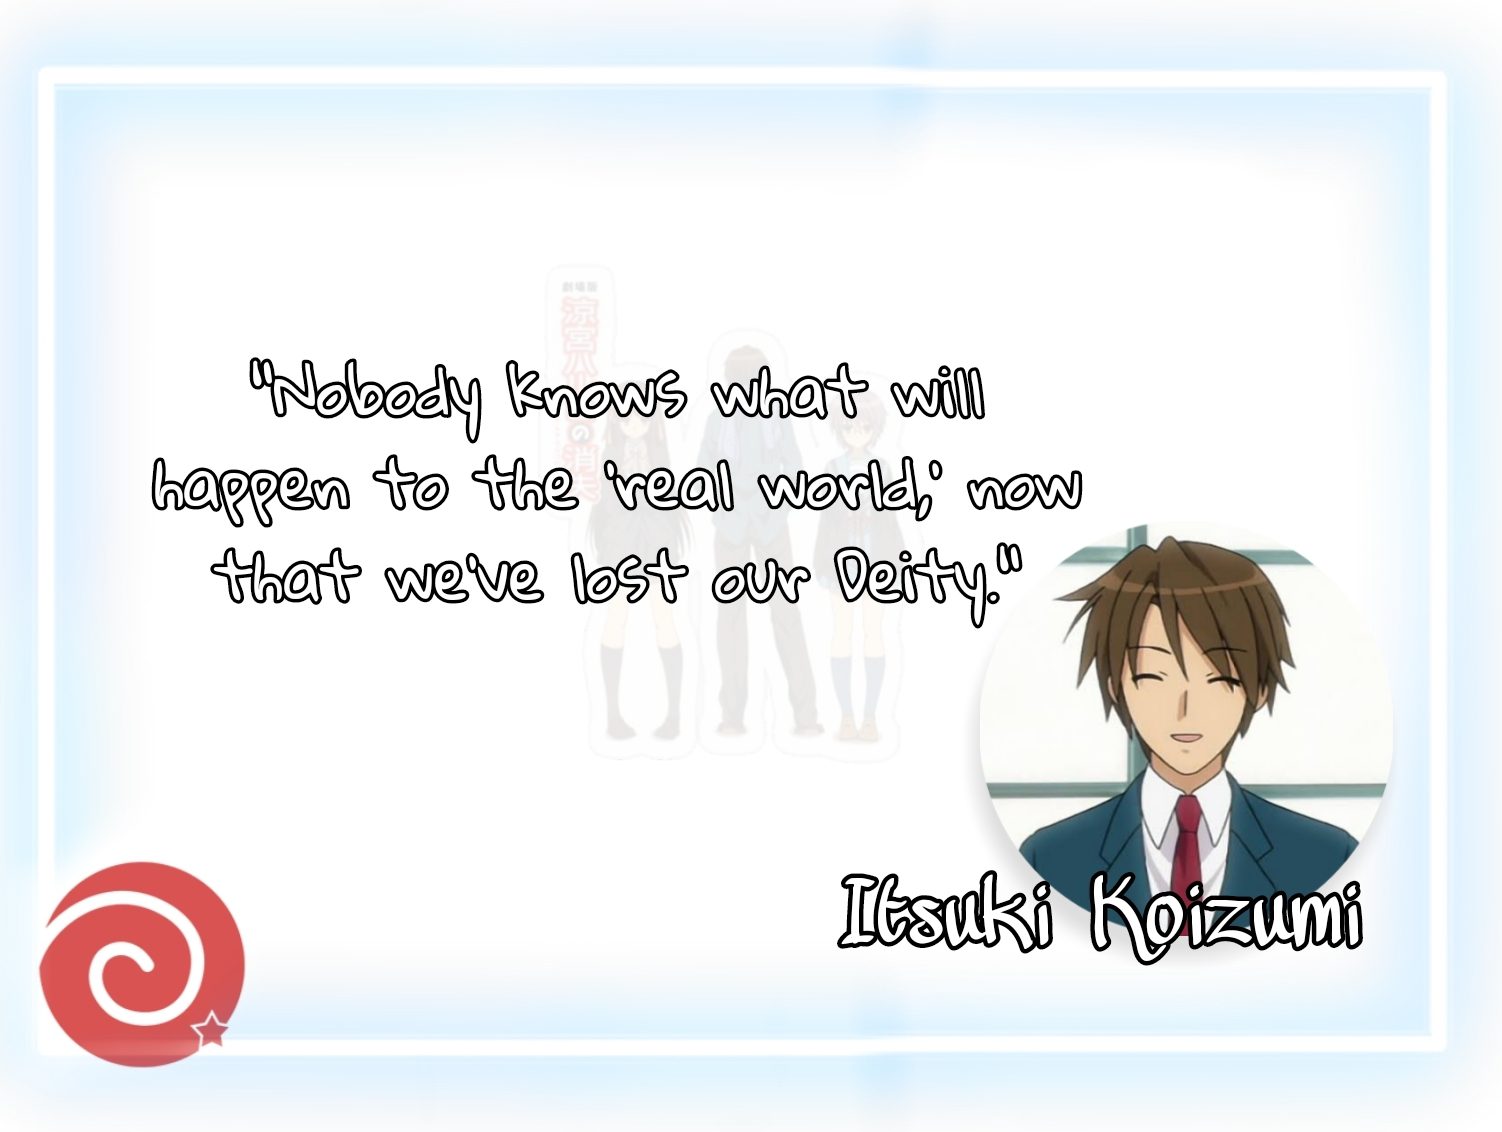 Itsuki Koizumi Quotes From The Melancholy of Haruhi Suzumiya